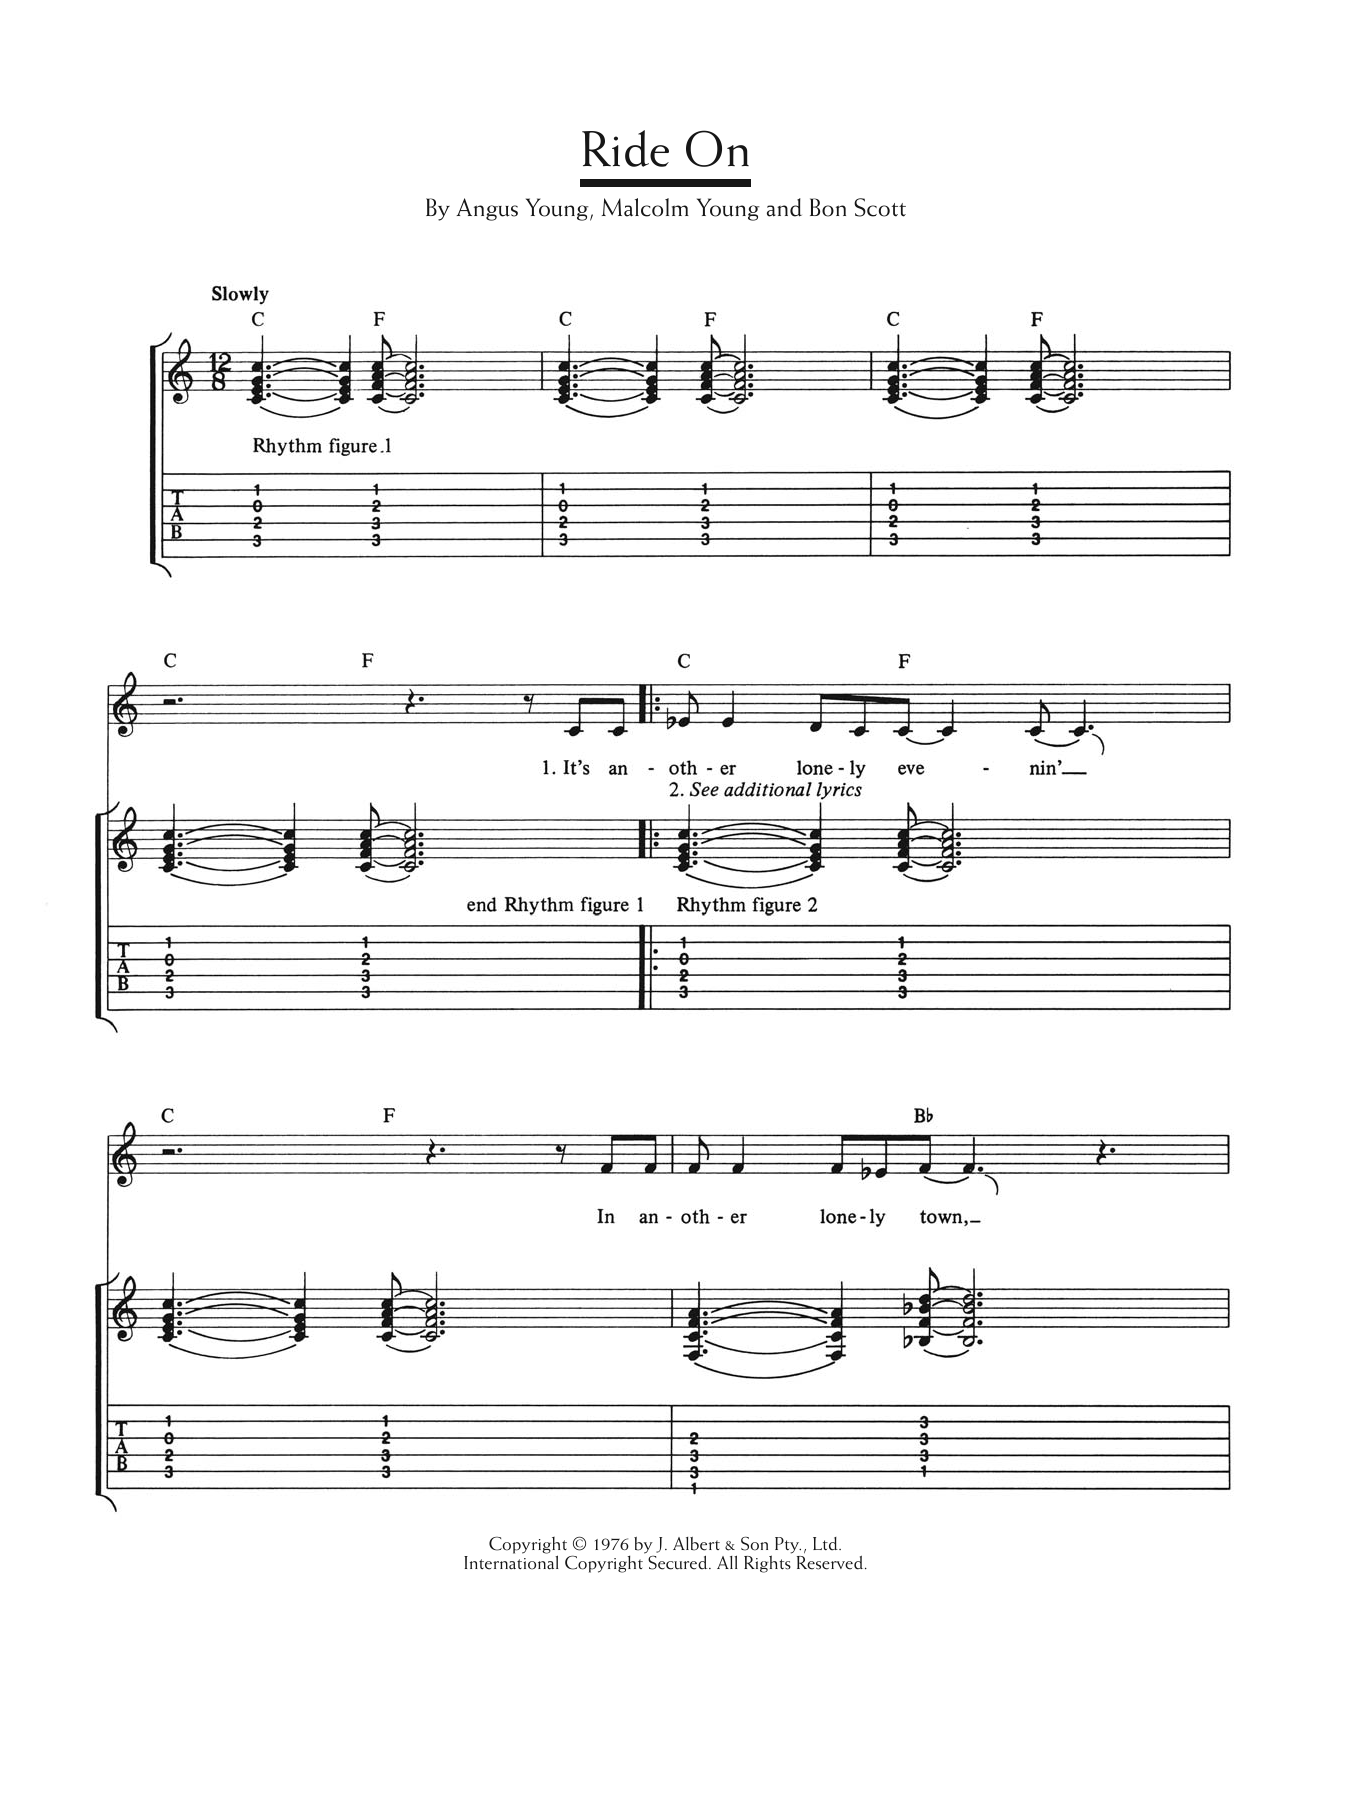 AC/DC Ride On Sheet Music Notes & Chords for Lyrics & Chords - Download or Print PDF